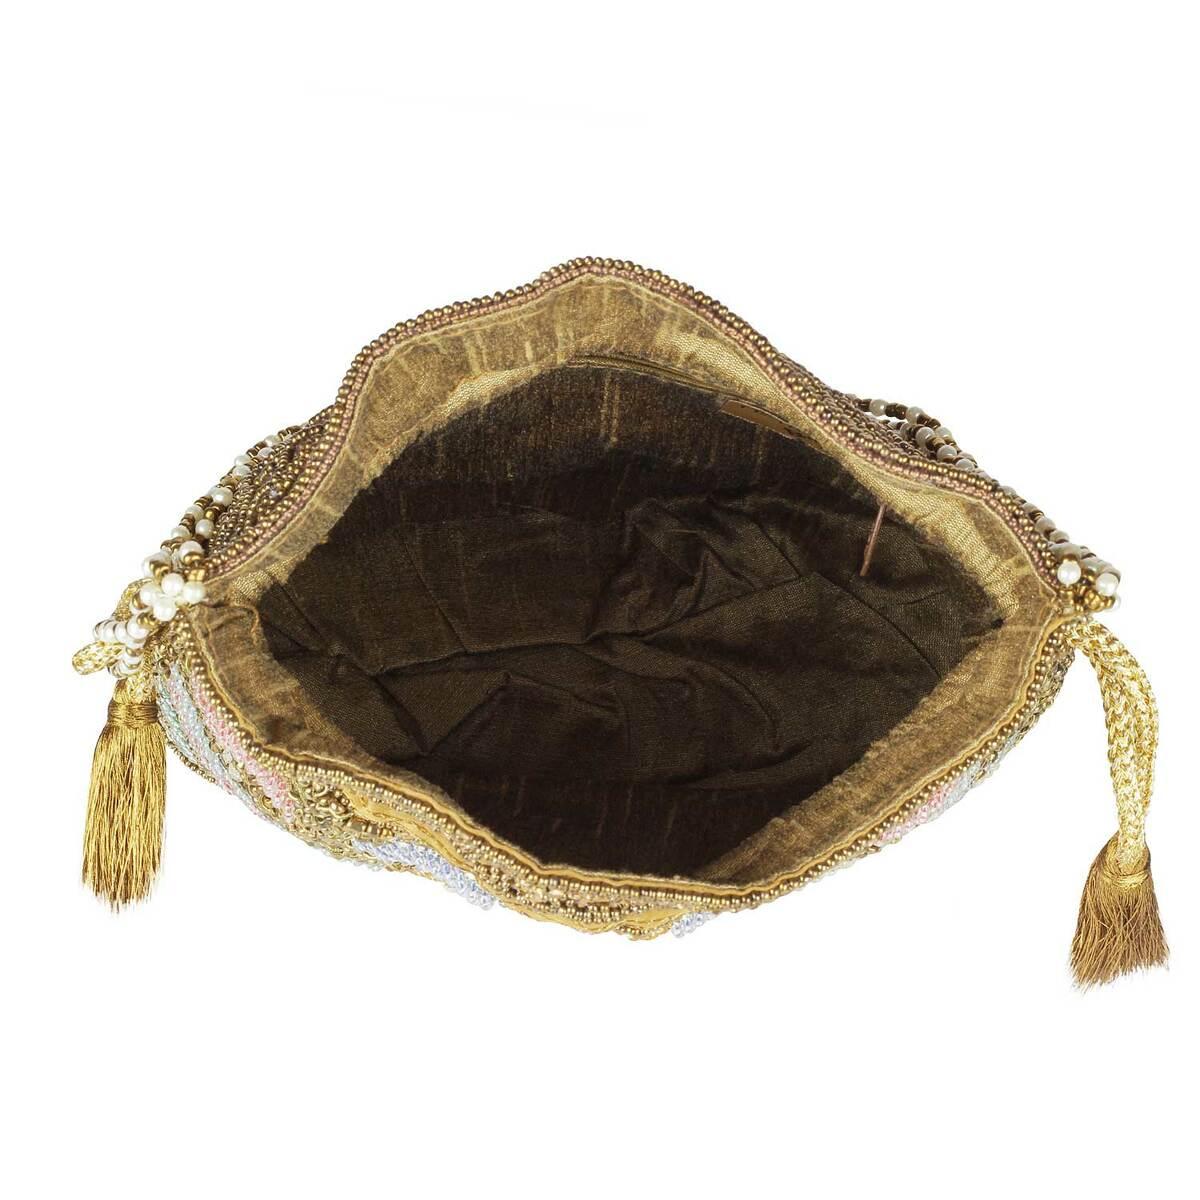 la terre fashion black and gold fringe purse | Fringe purse, Gold fringe,  Black fashion